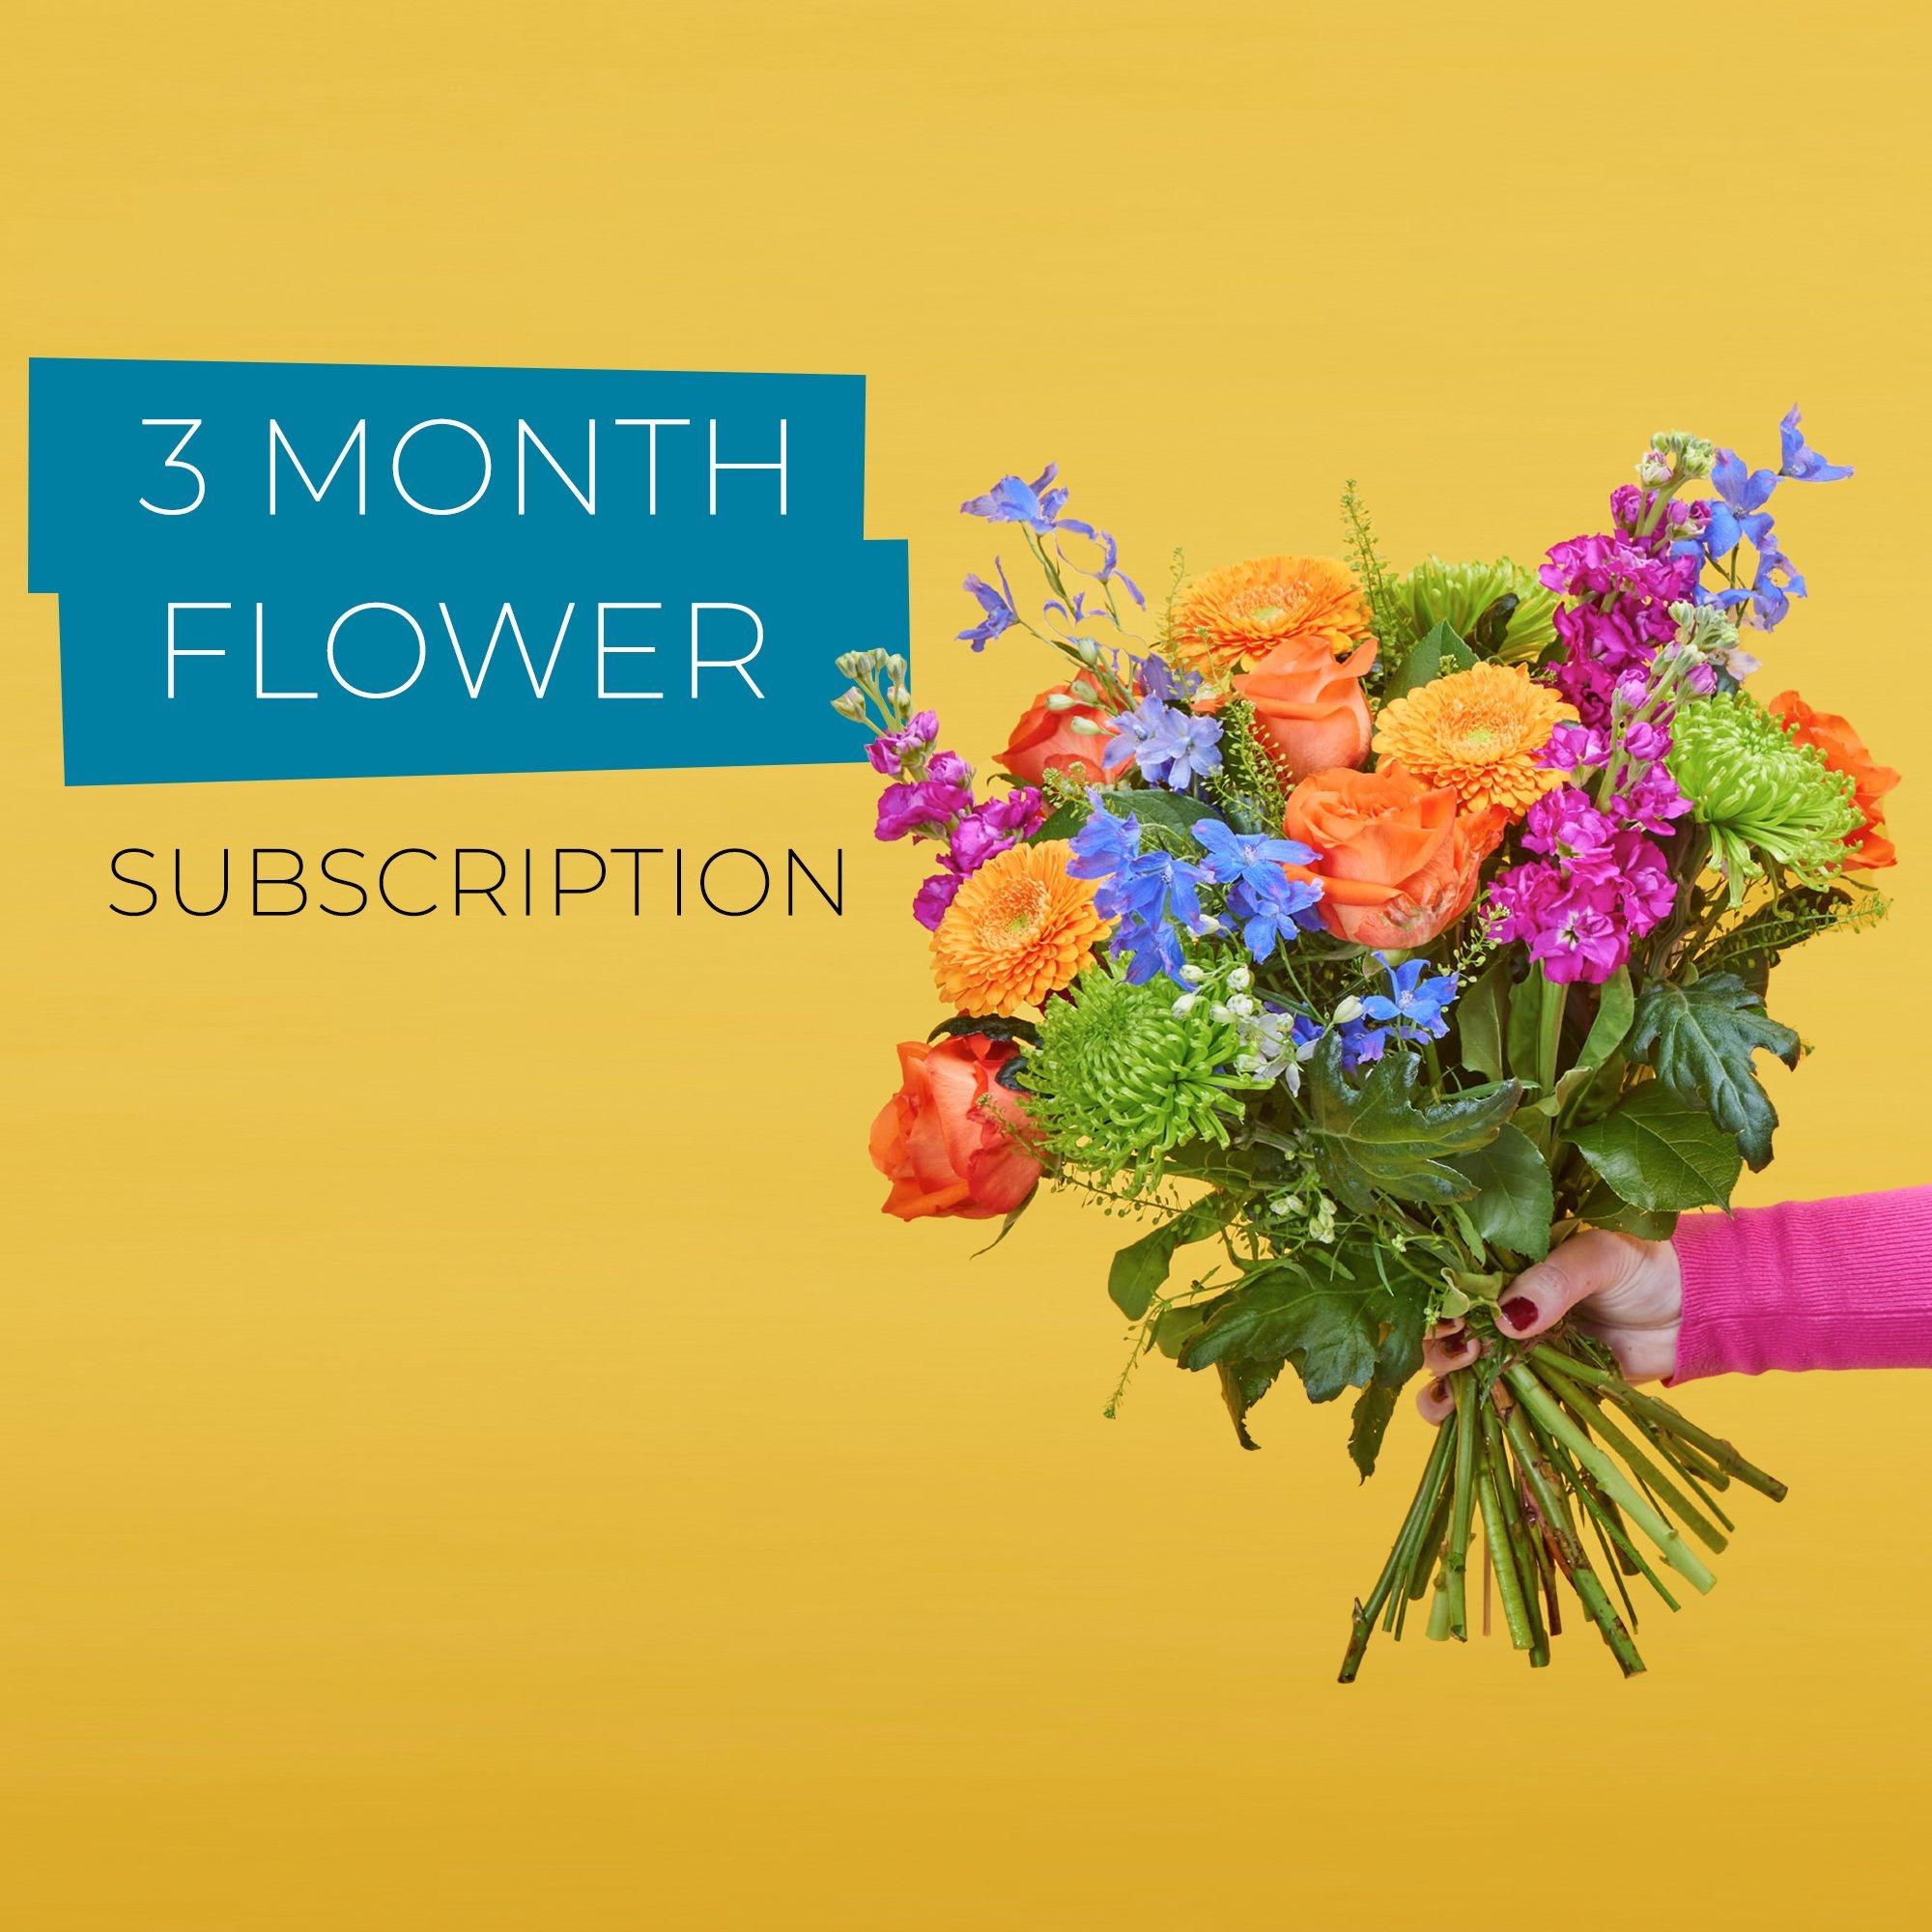 Flower Bouquet Landliebe: Gift/Send Mother's Day Gifts Online IP1122018  |IGP.com